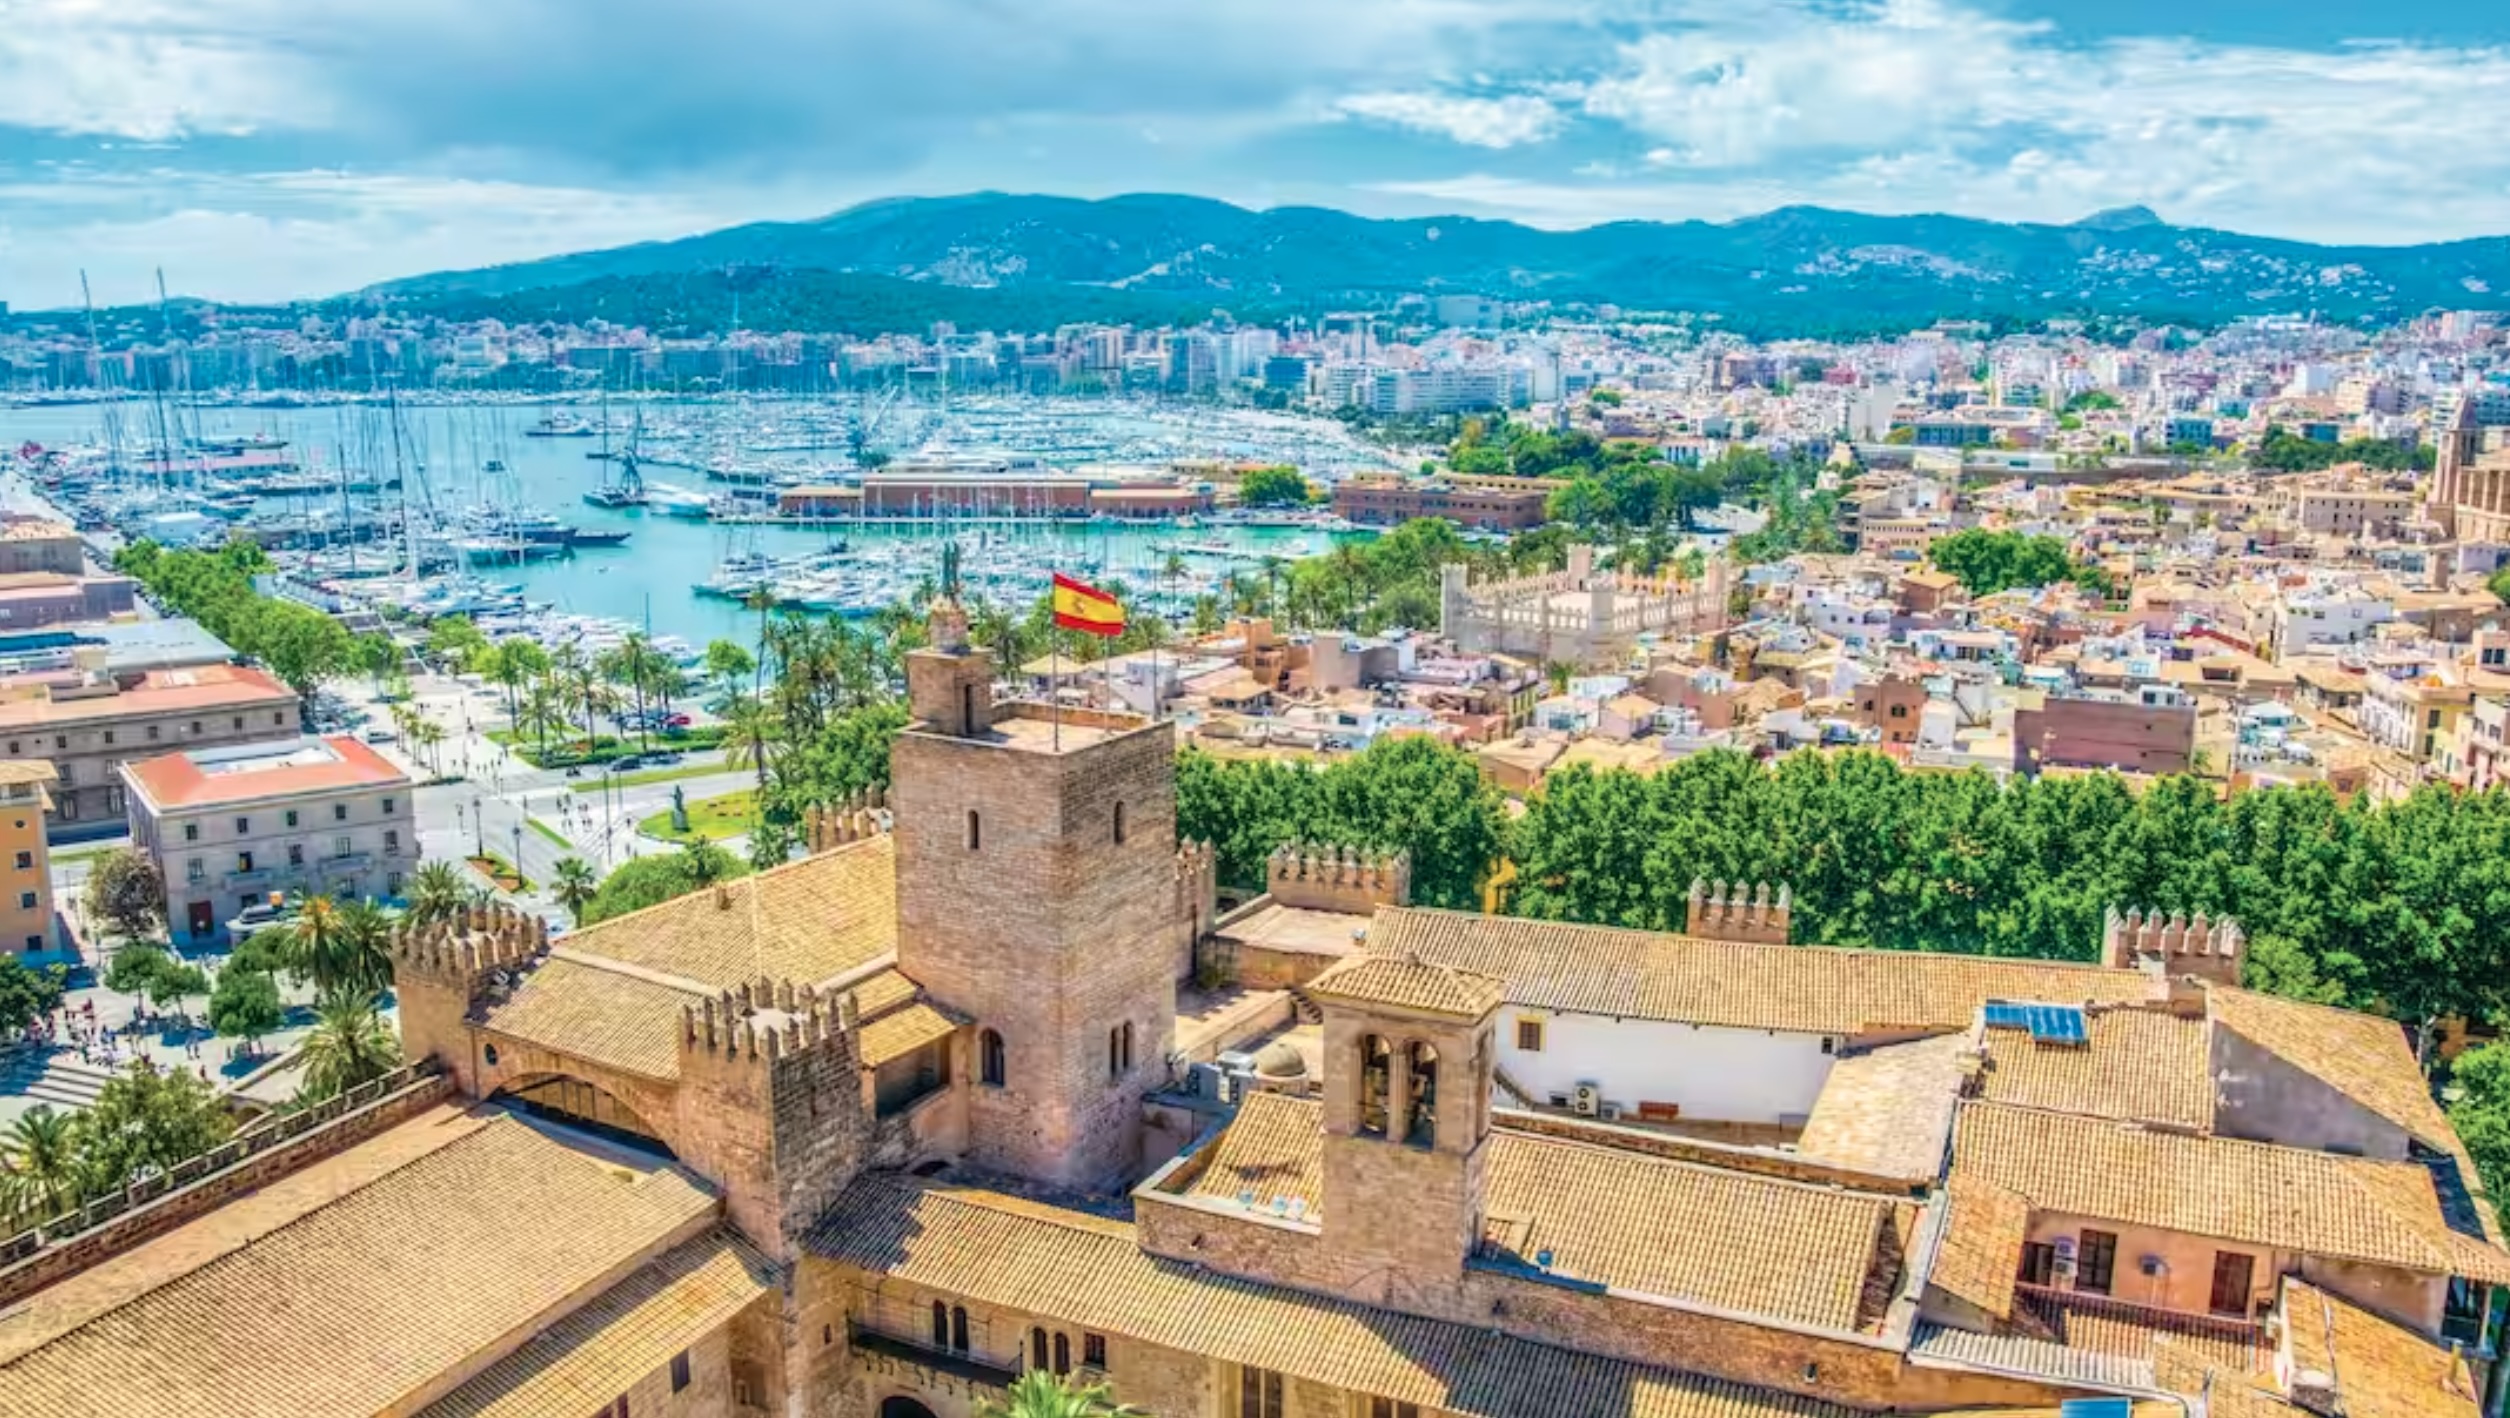 Aerial view of Palma, Majorca